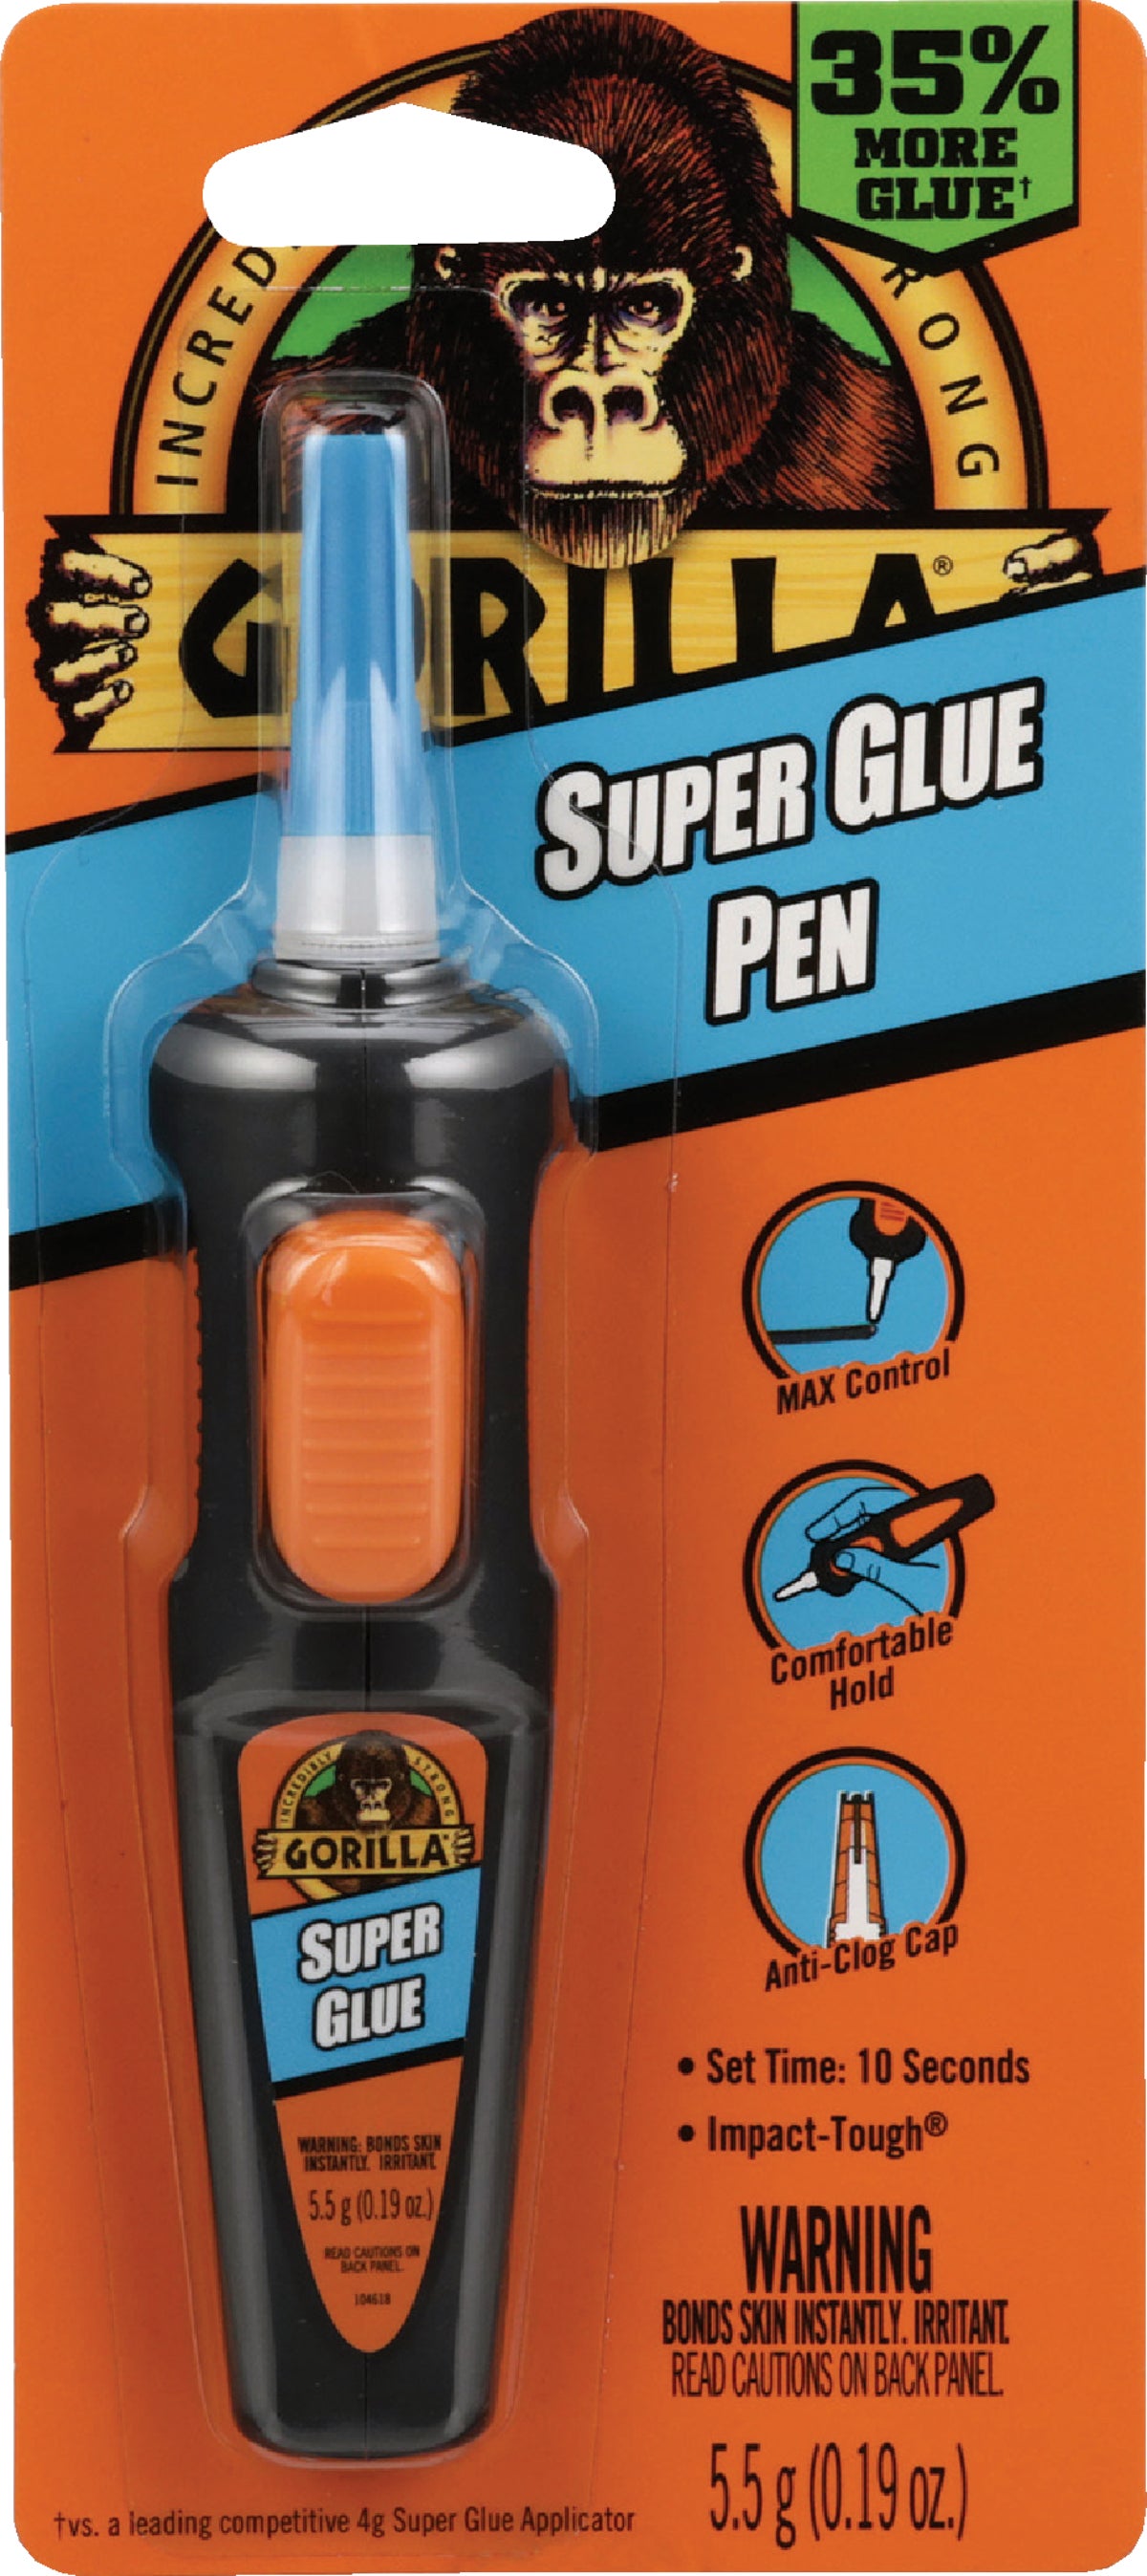  Goof Off Super Glue Remover - 4 oz. can, Yellow (FG678) :  Industrial & Scientific